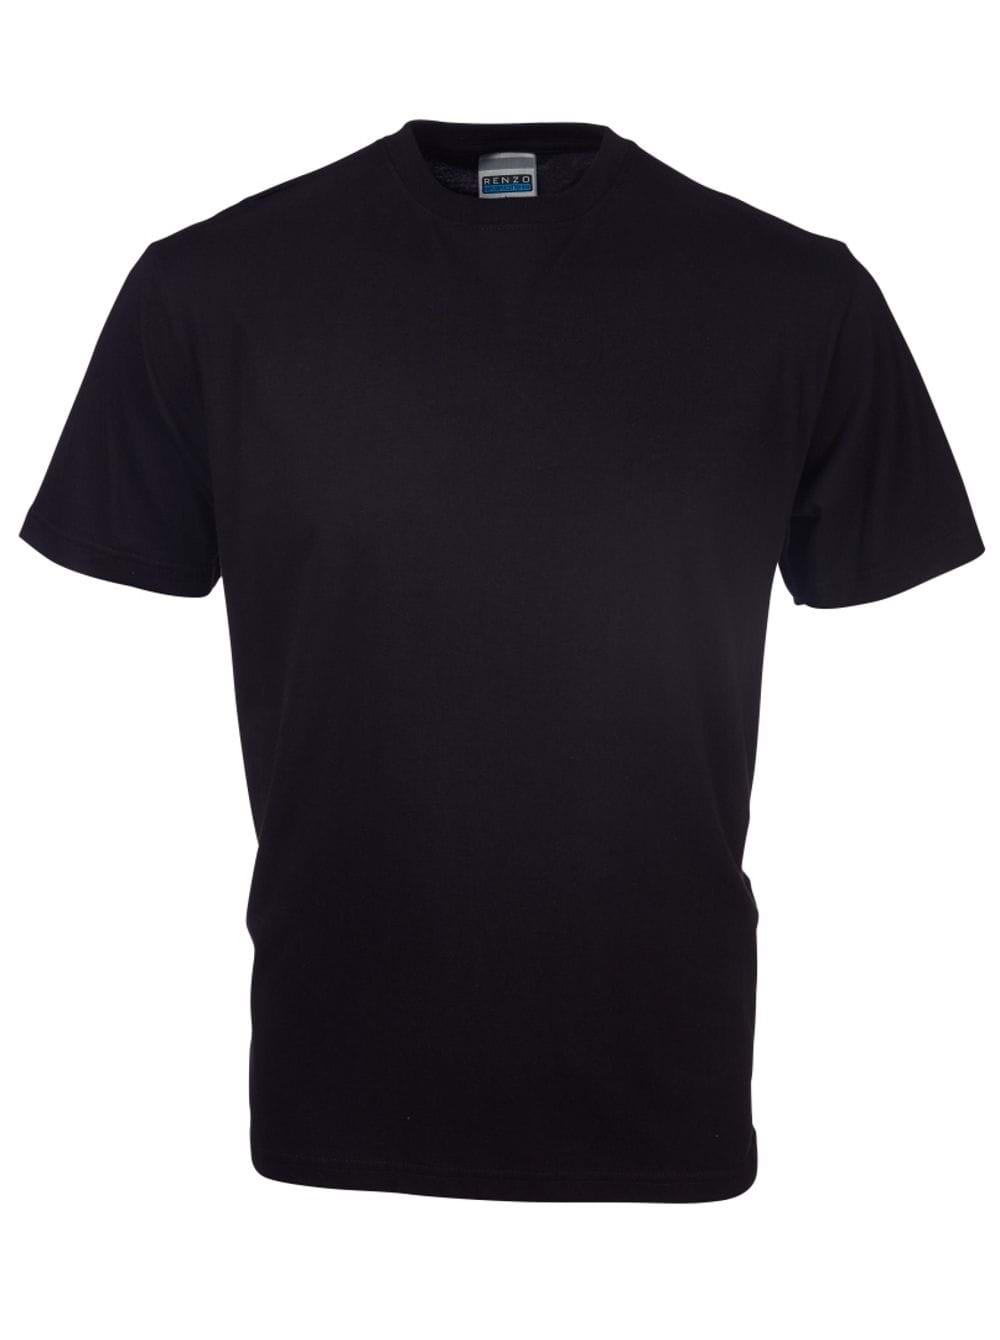 165gsm Crew Neck T-Shirt - Black / SS